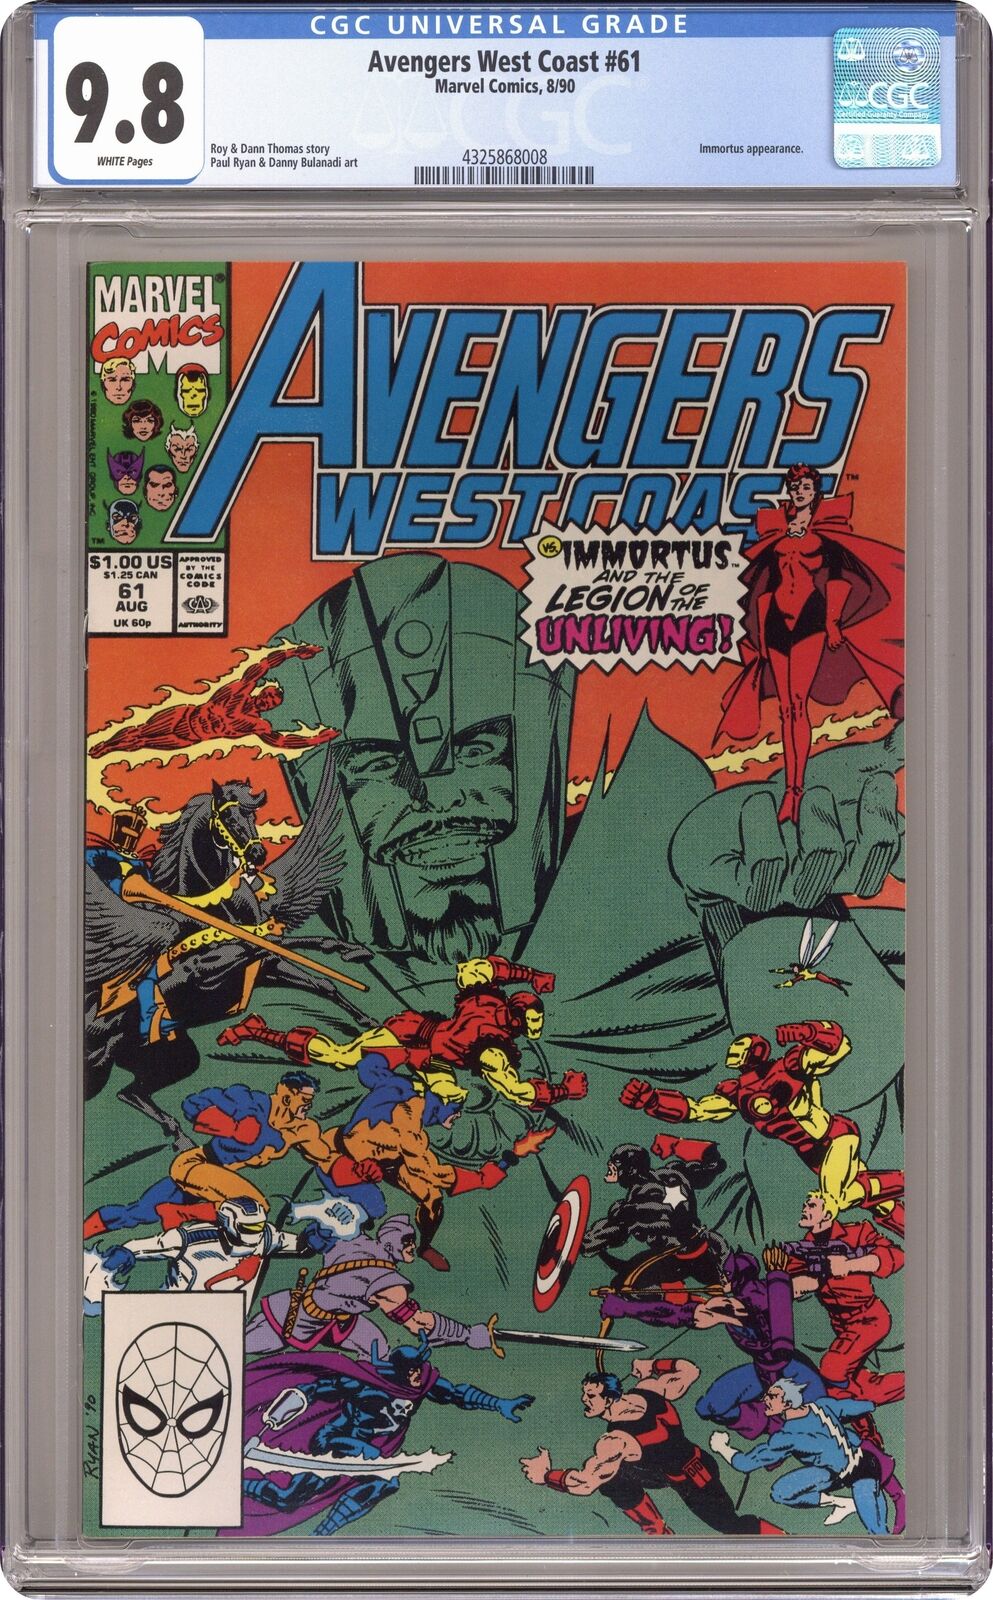 Avengers West Coast #61 CGC 9.8 1990 4325868008